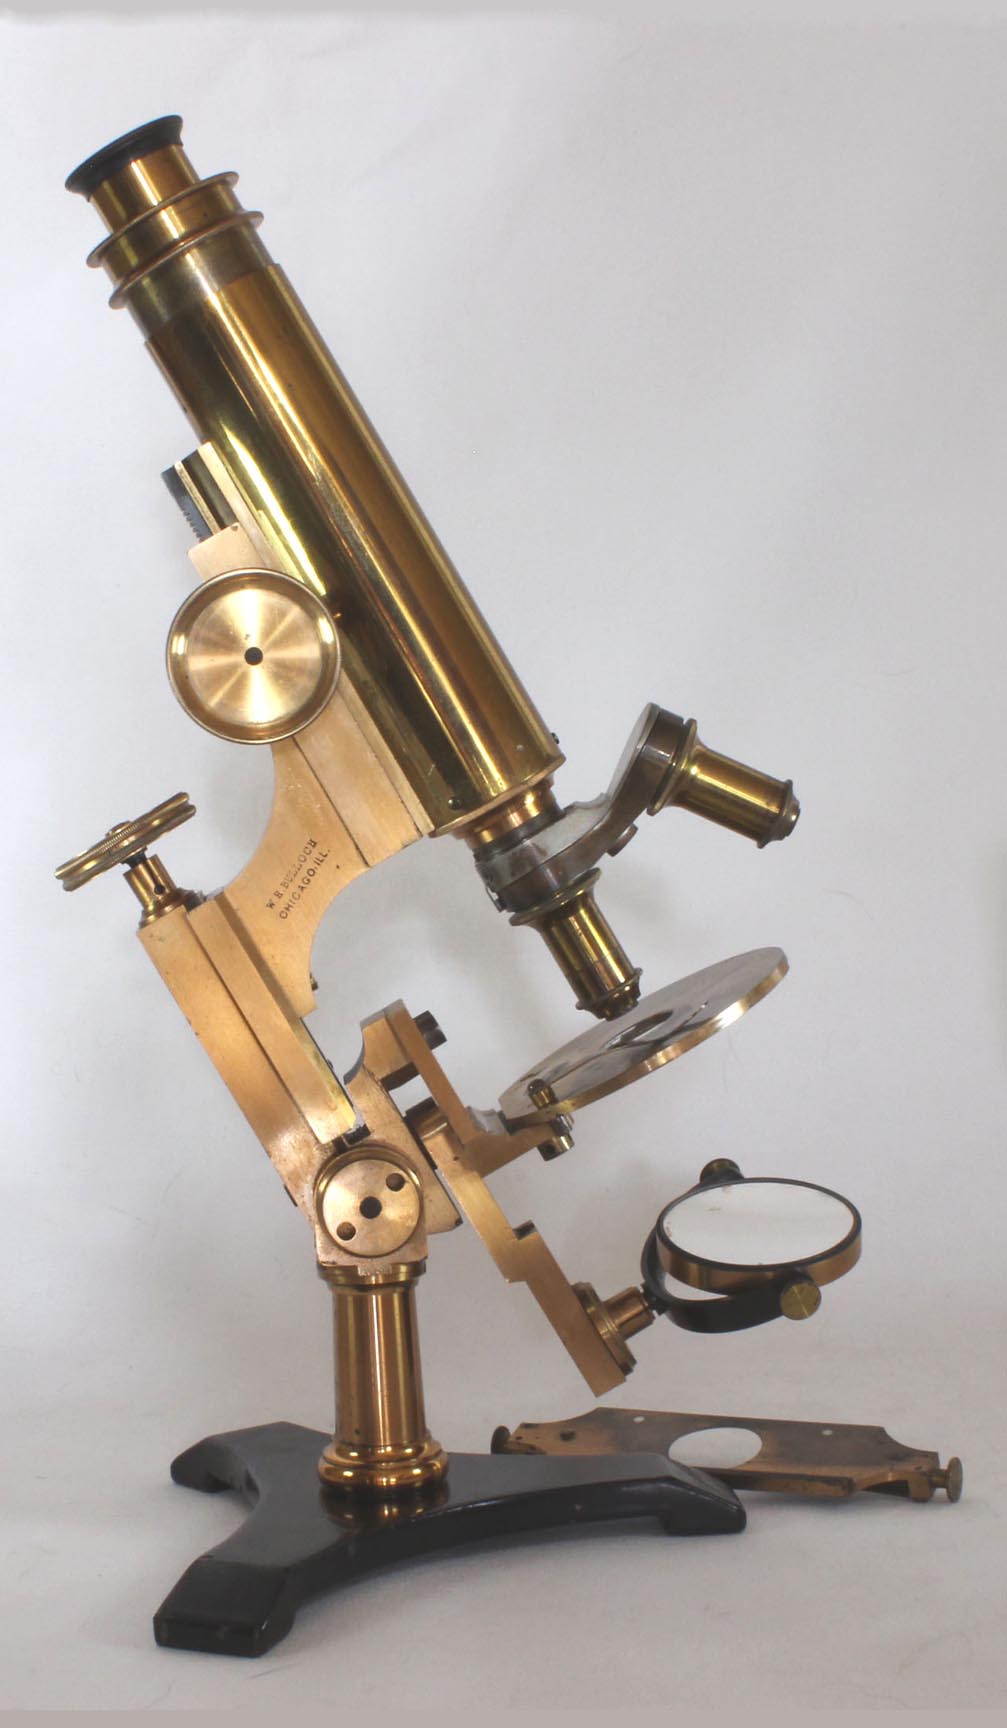 Bulloch New Student microscope